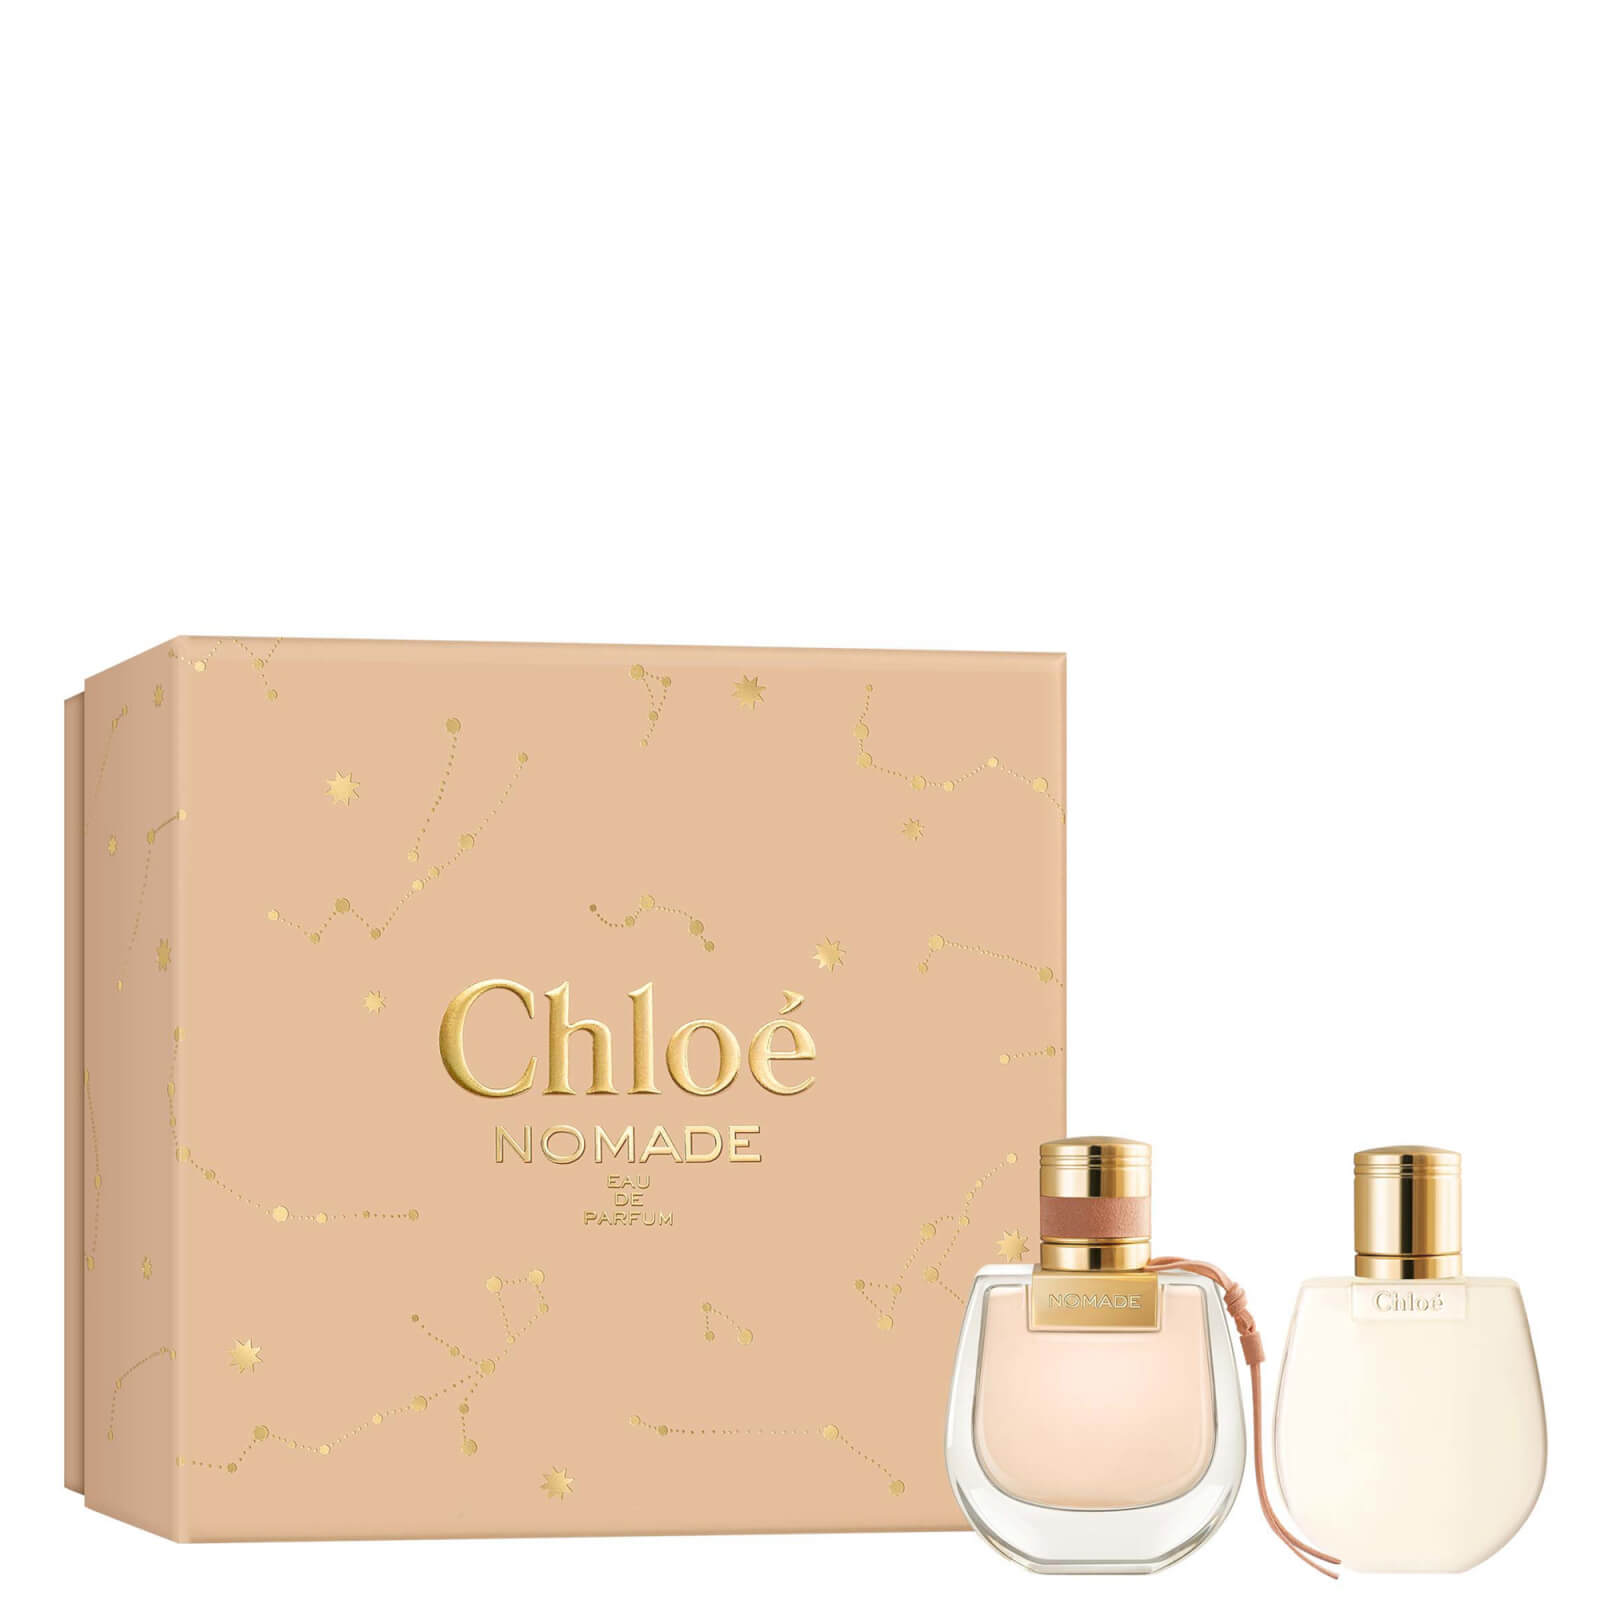 Chloe Ladies Mini Variety Pack Gift Set Fragrances 3614228434980